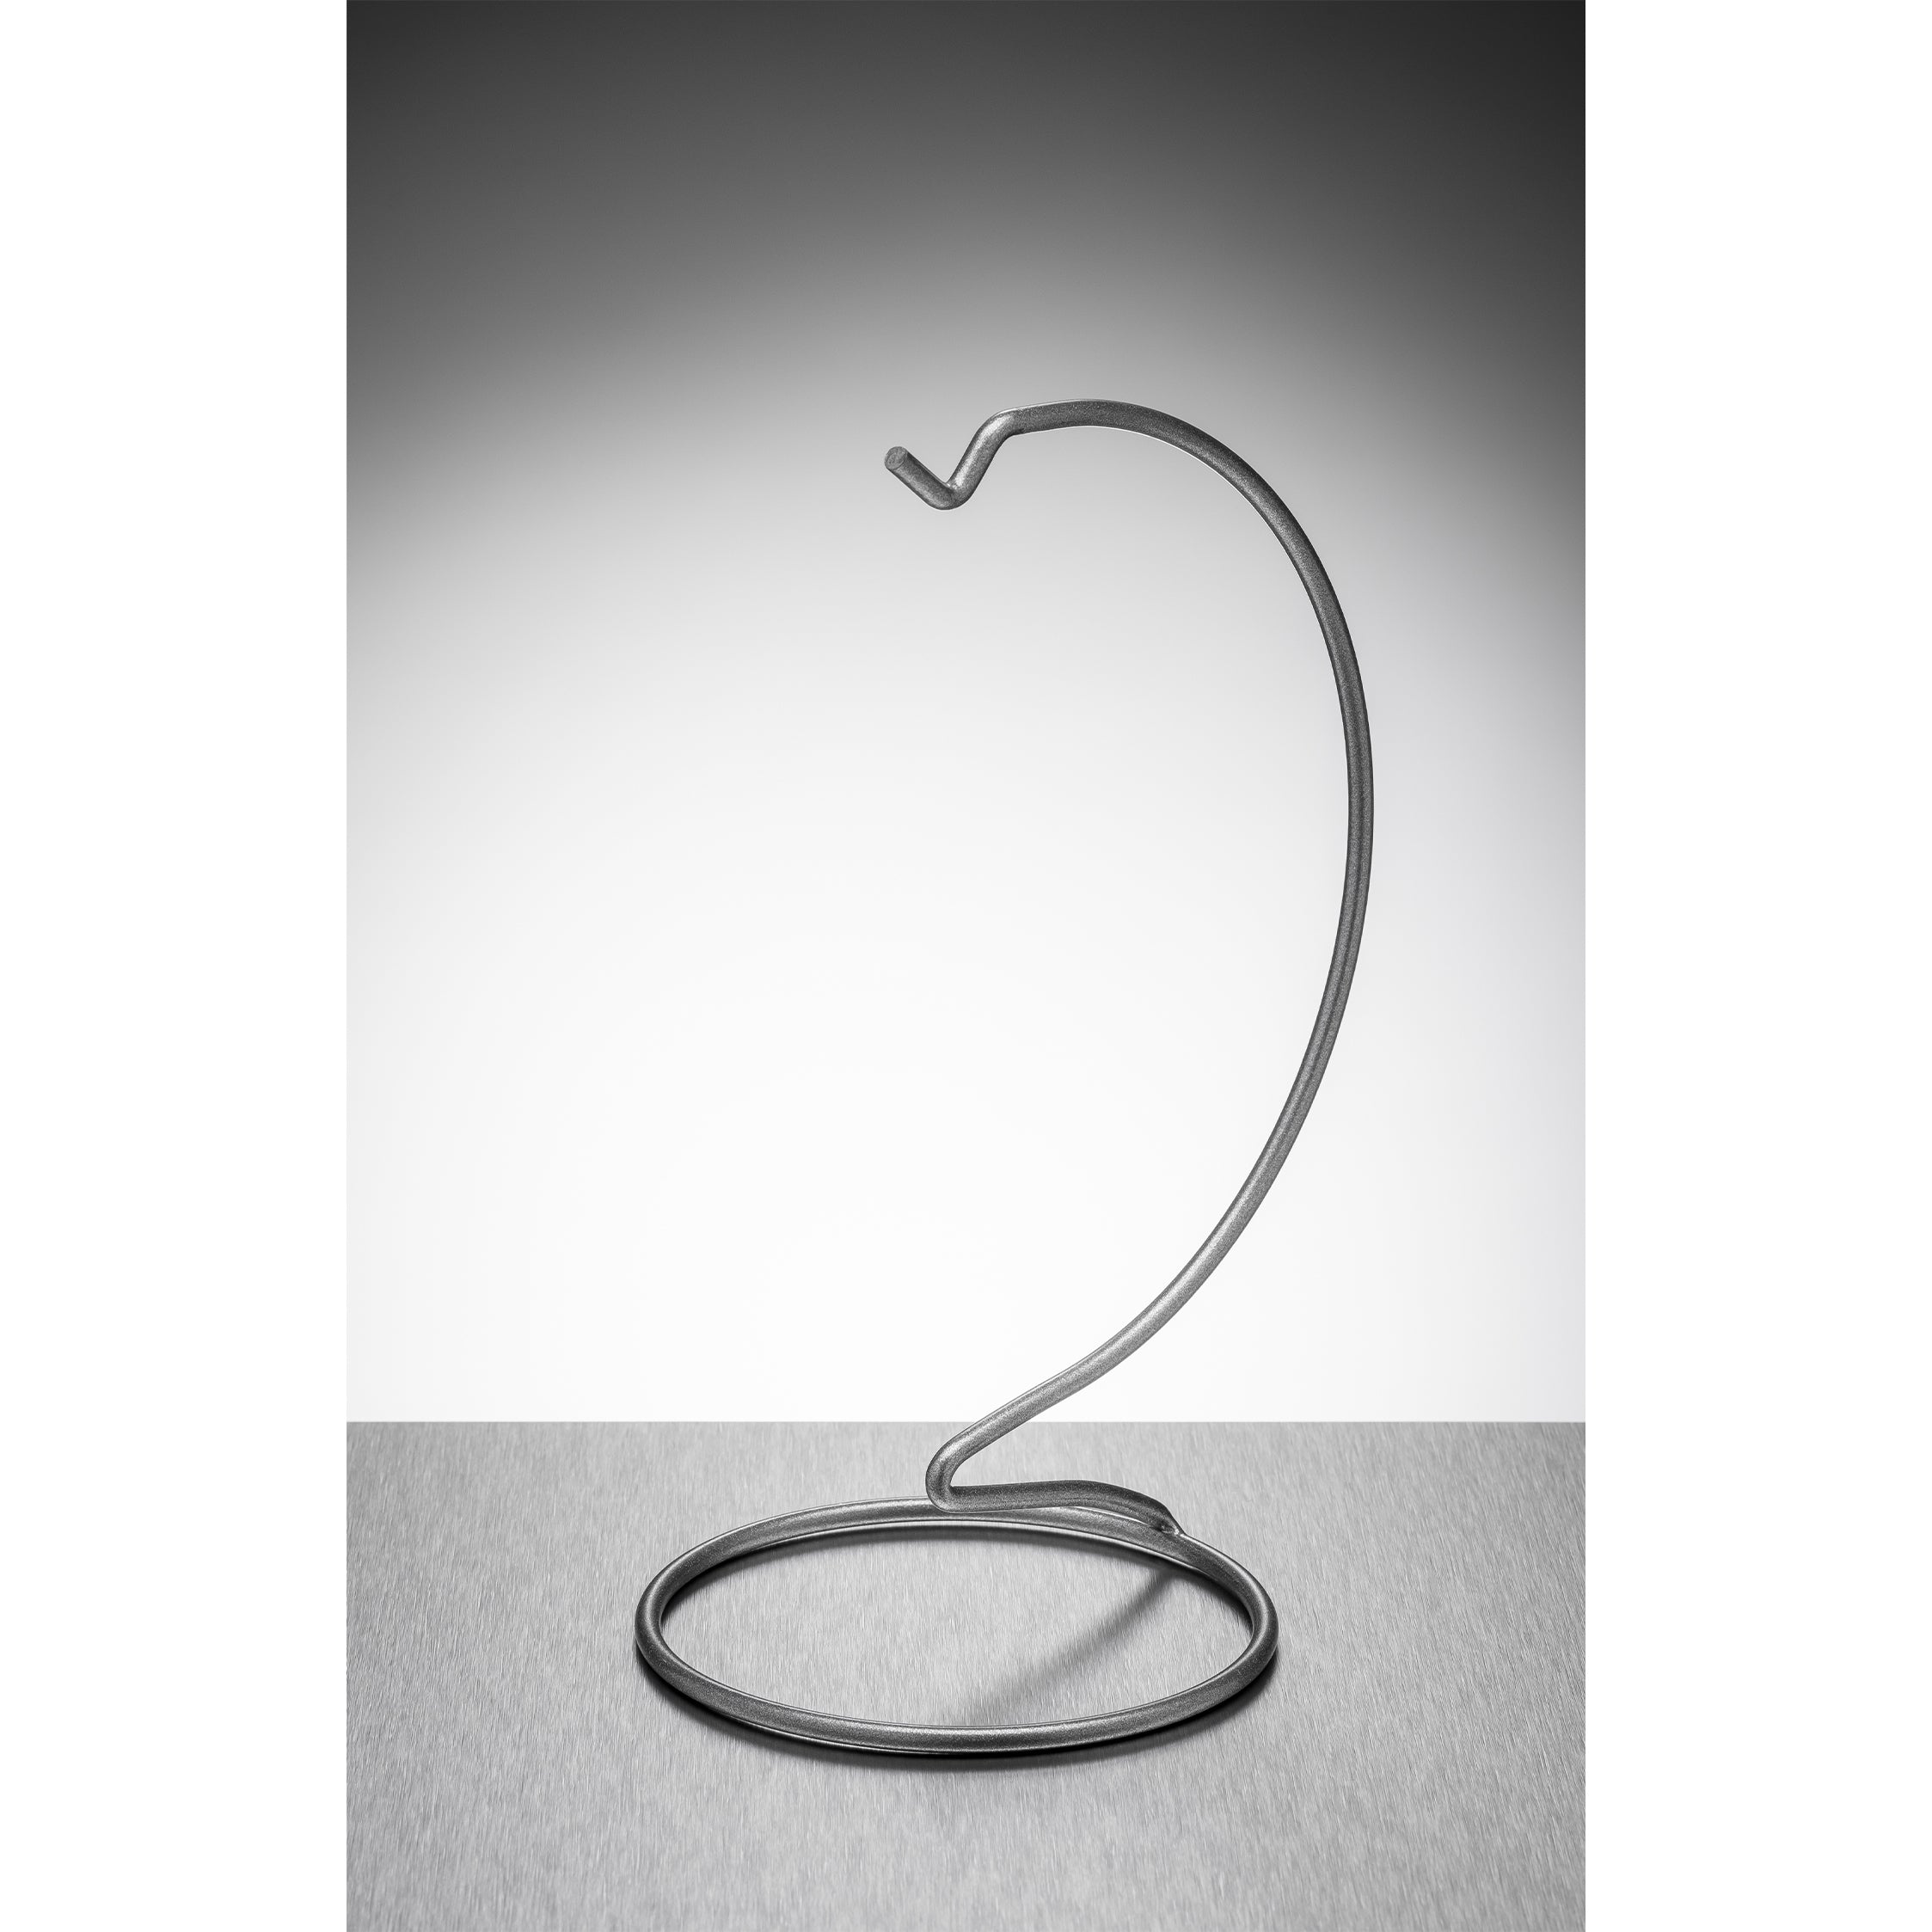 Silver Metal Ornament Stand - Medium - Aspire Art Glass